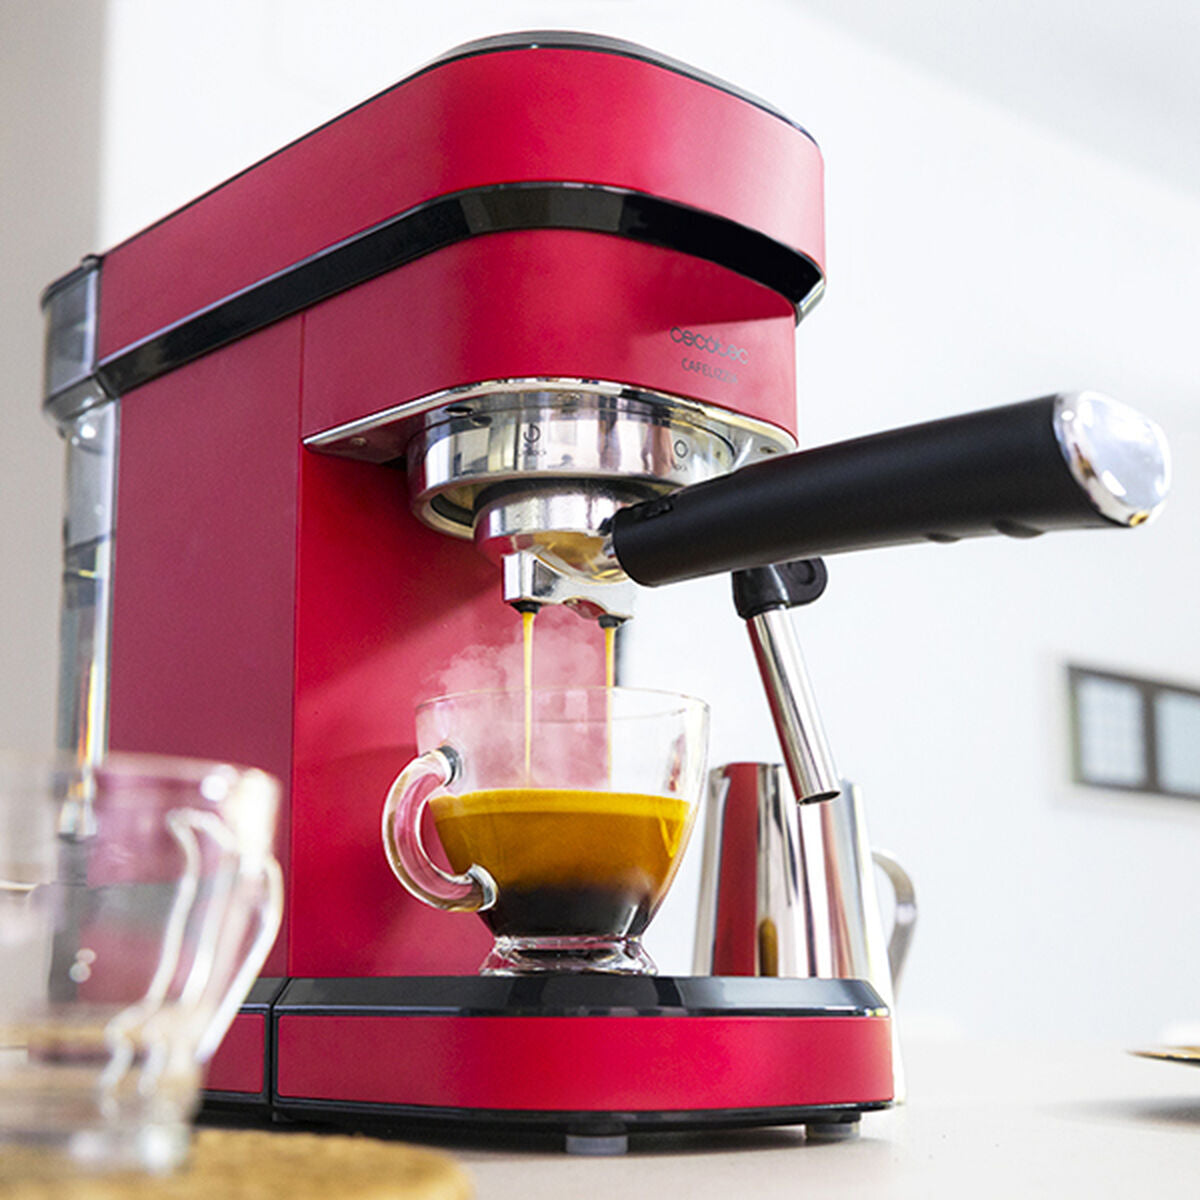 Express Manual Coffee Machine Cecotec Cafelizzia 790 Glanzende 1,2 L 20